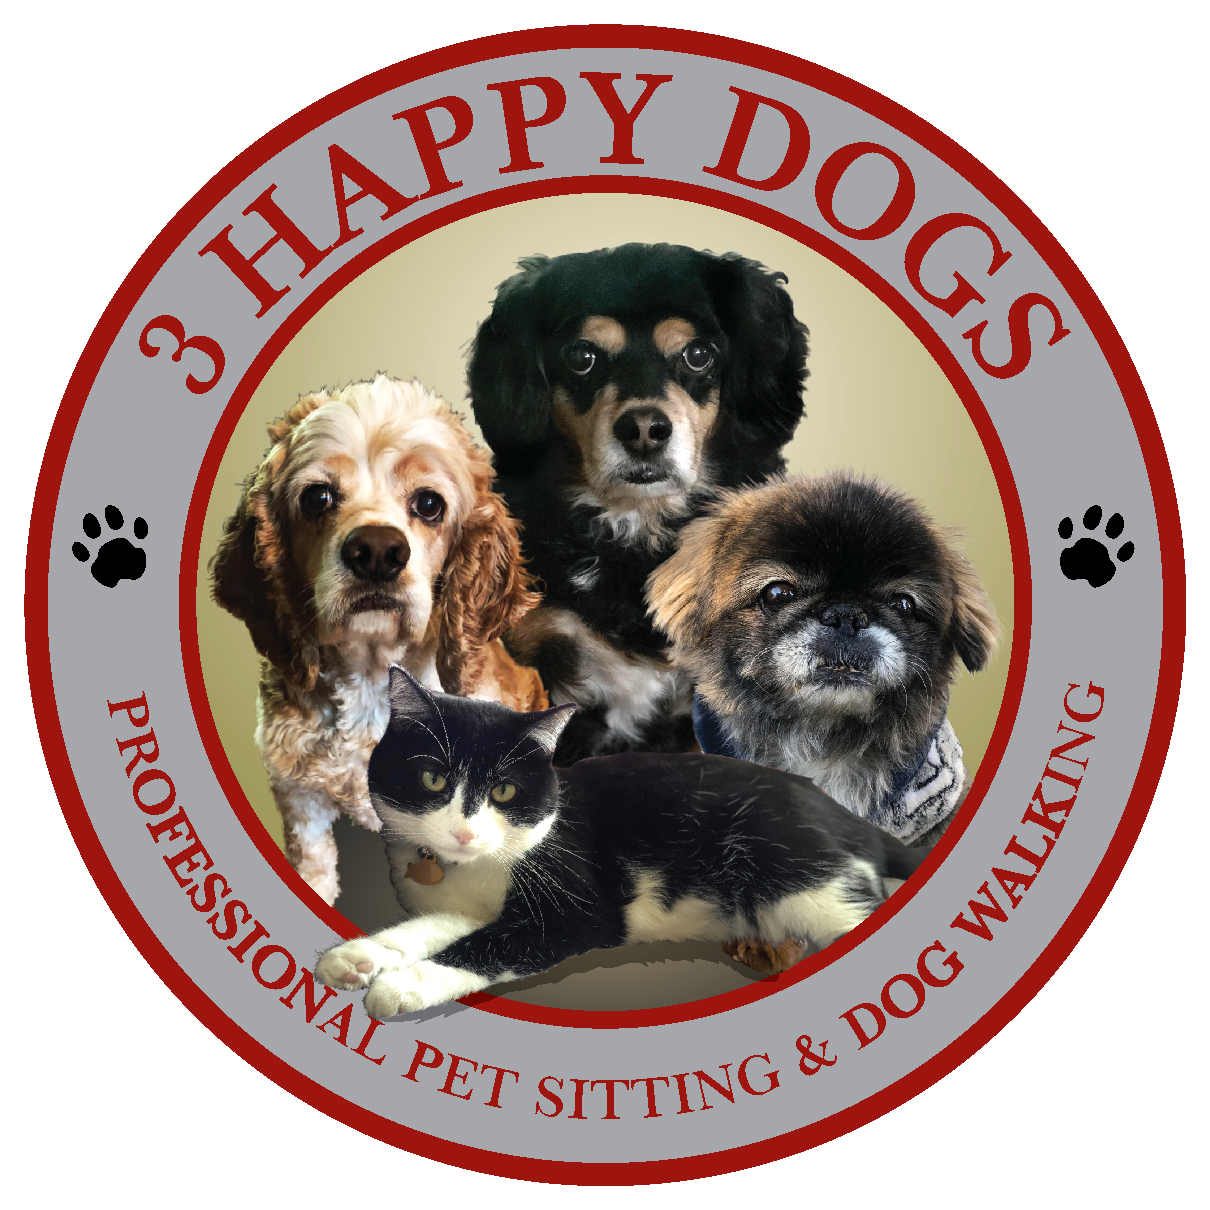 3 Happy Dogs, LLC